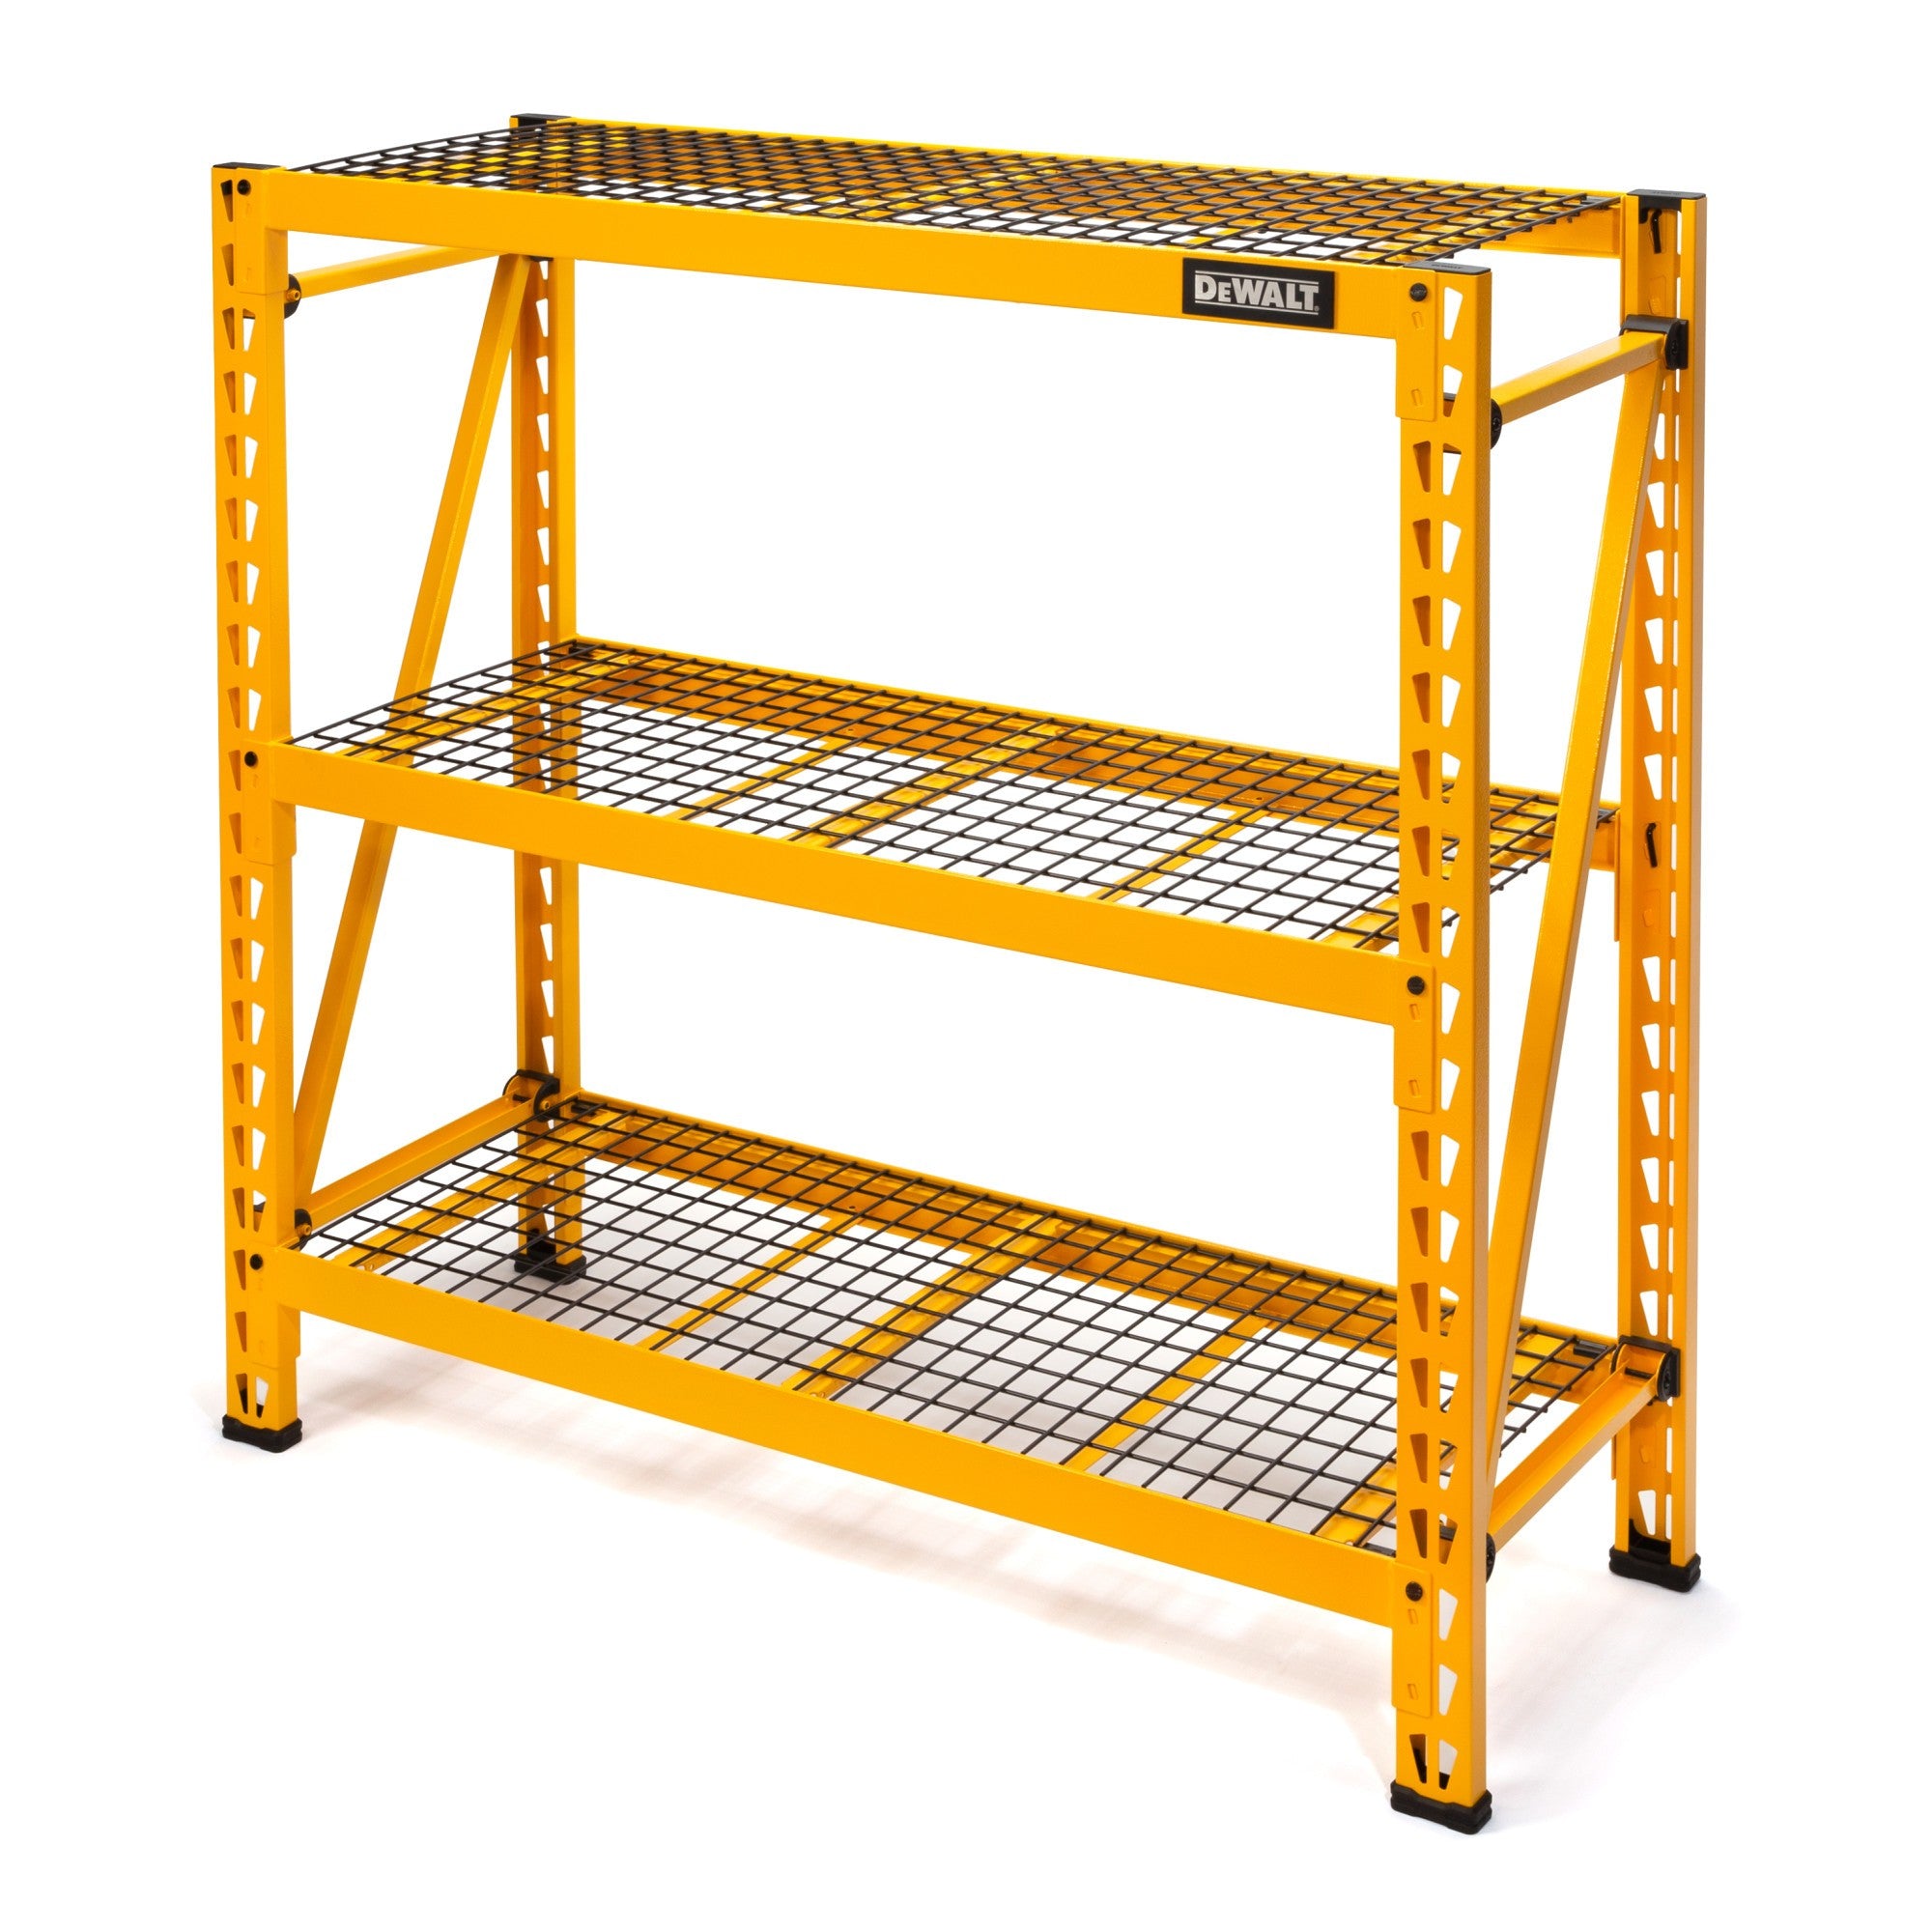 DeWalt 41590 DXST4500-W 4-Foot Tall, 3 Shelf Steel Wire Deck Industrial Storage Rack